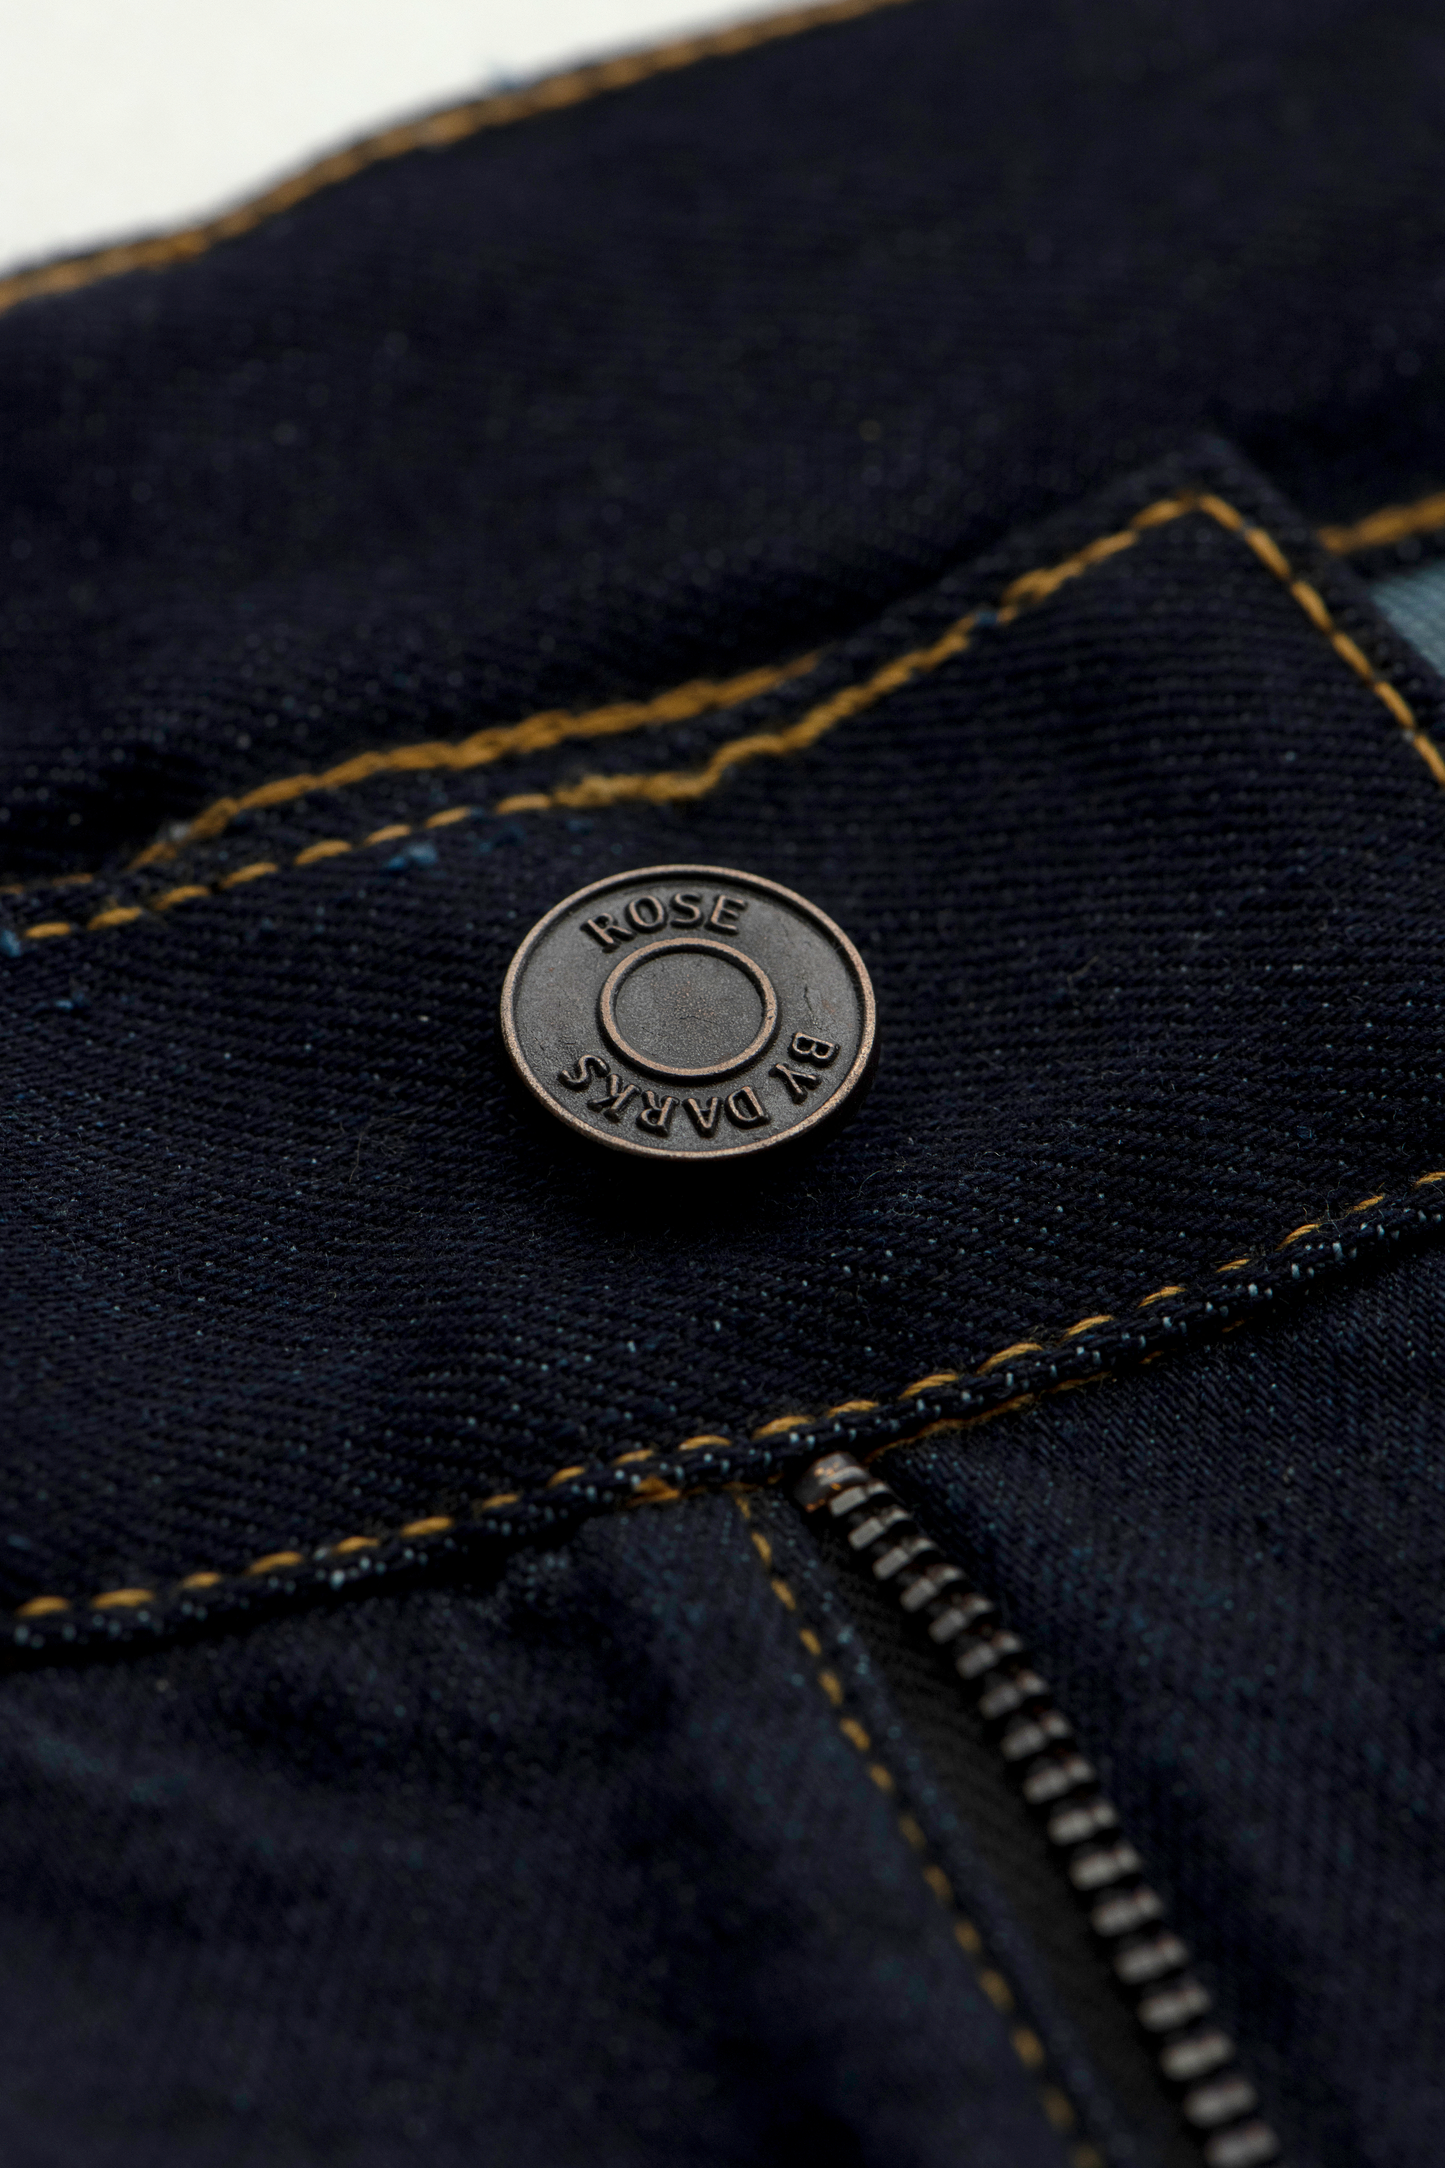 Selvedge Denim Slim Tapered Jeans- Indigo